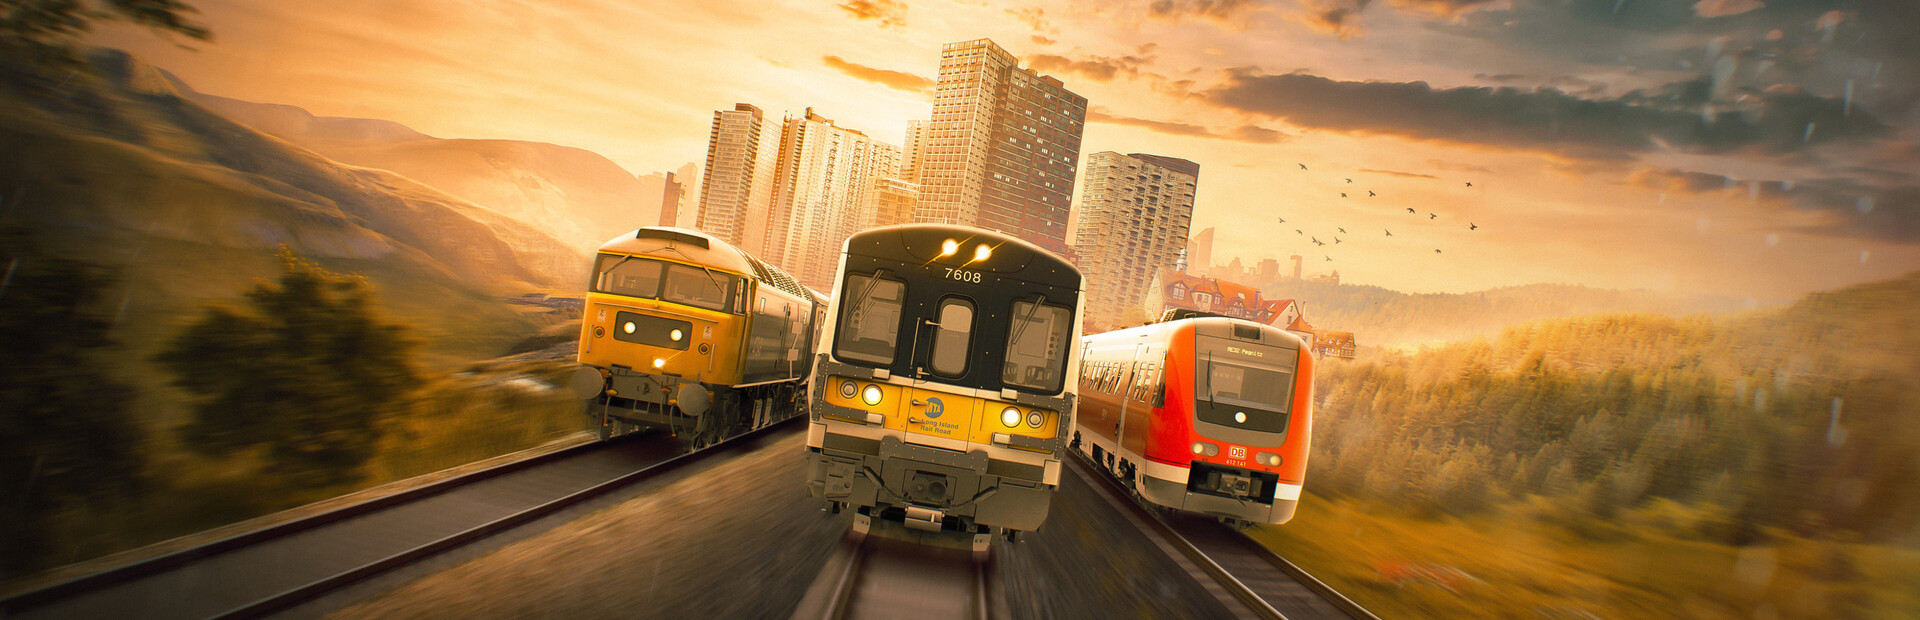 Train Simulator Classic cover image